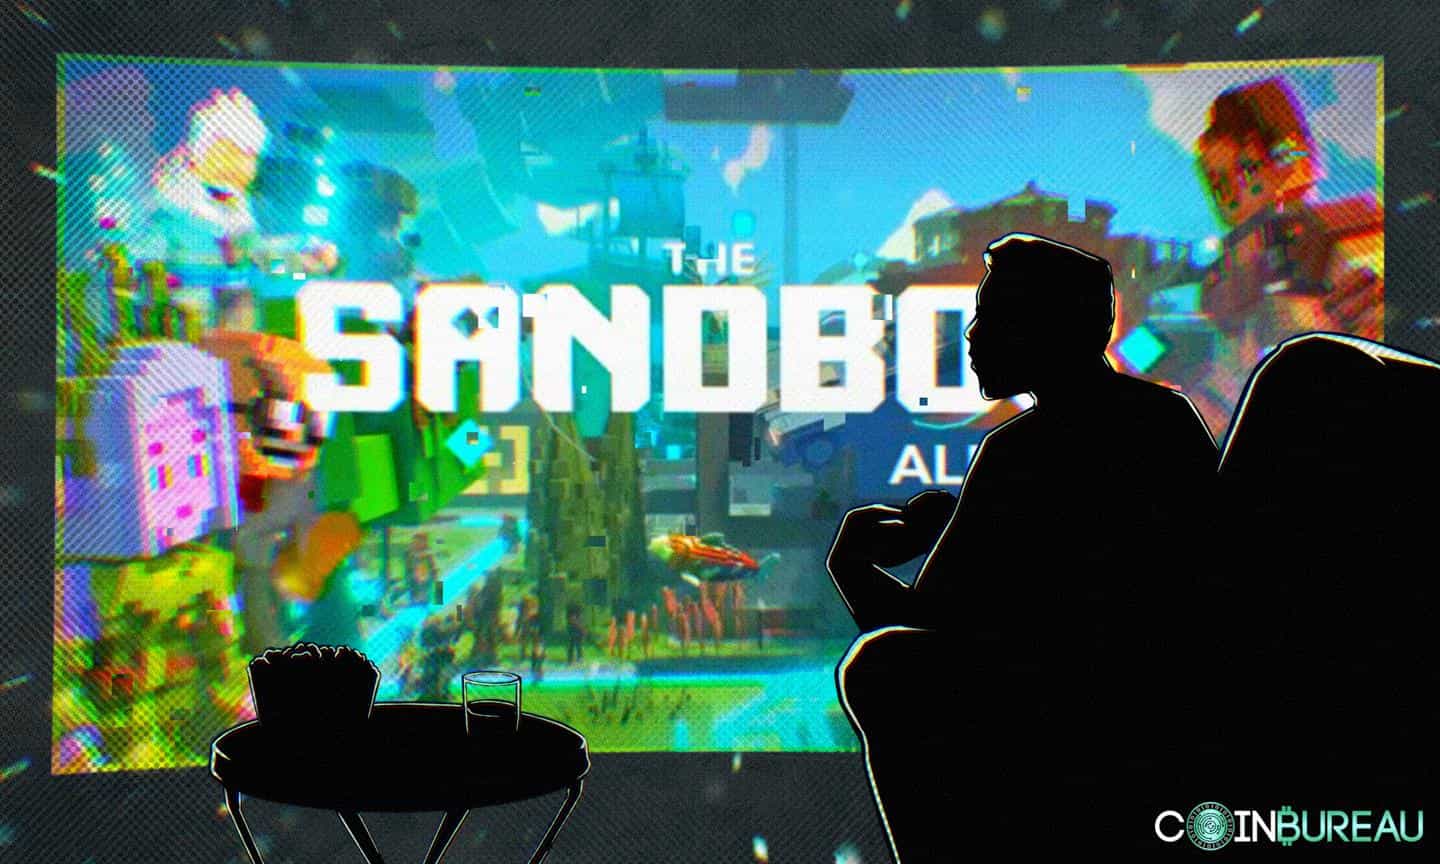 The Sandbox Review